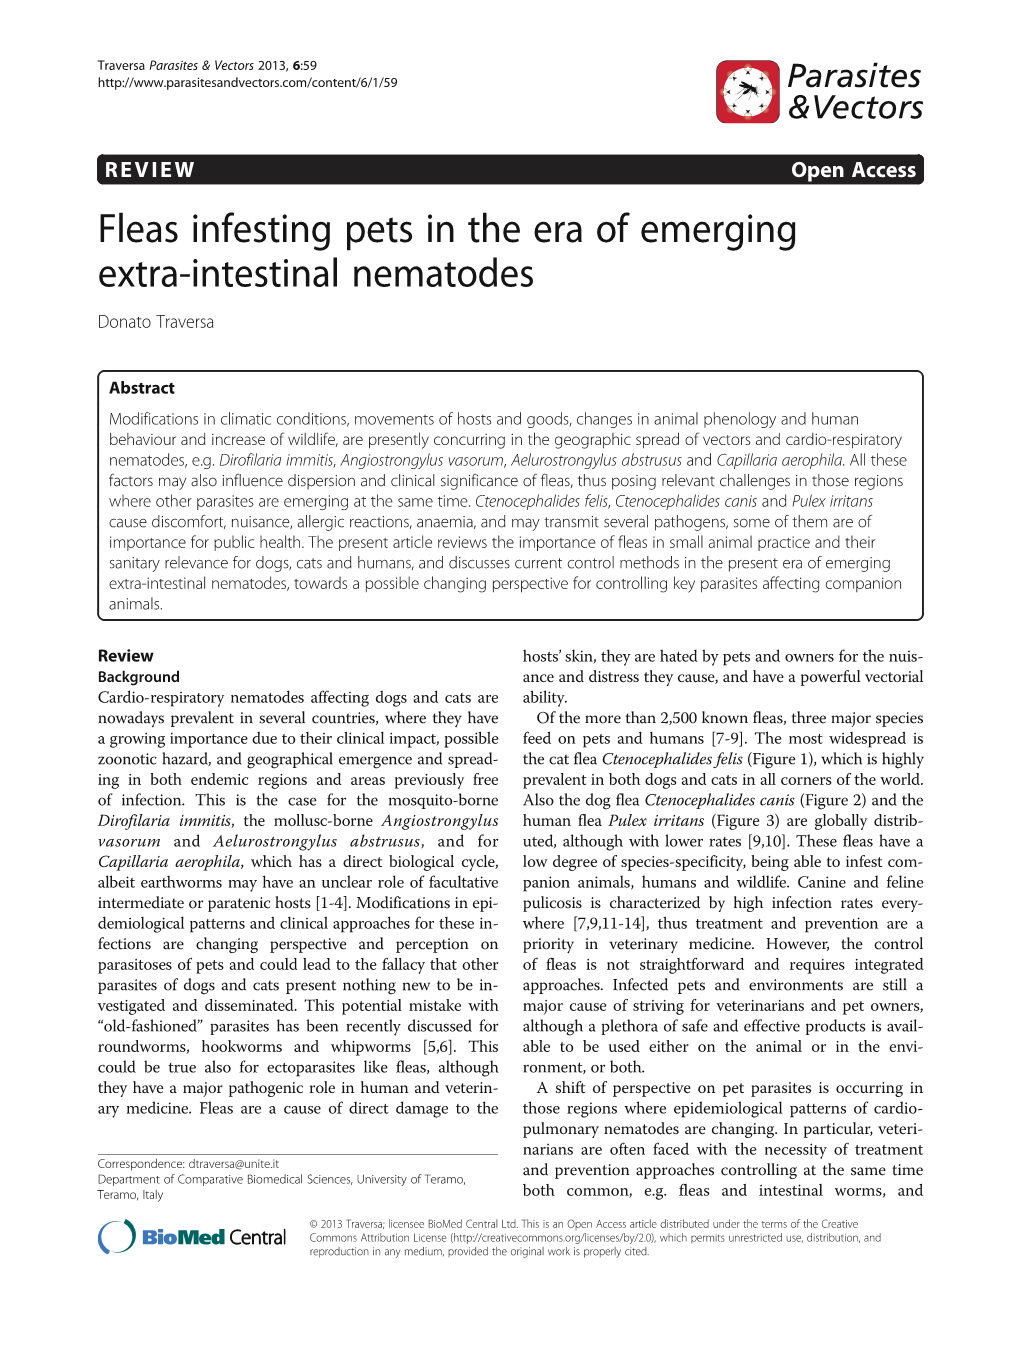 Fleas Infesting Pets in the Era of Emerging Extra-Intestinal Nematodes Donato Traversa